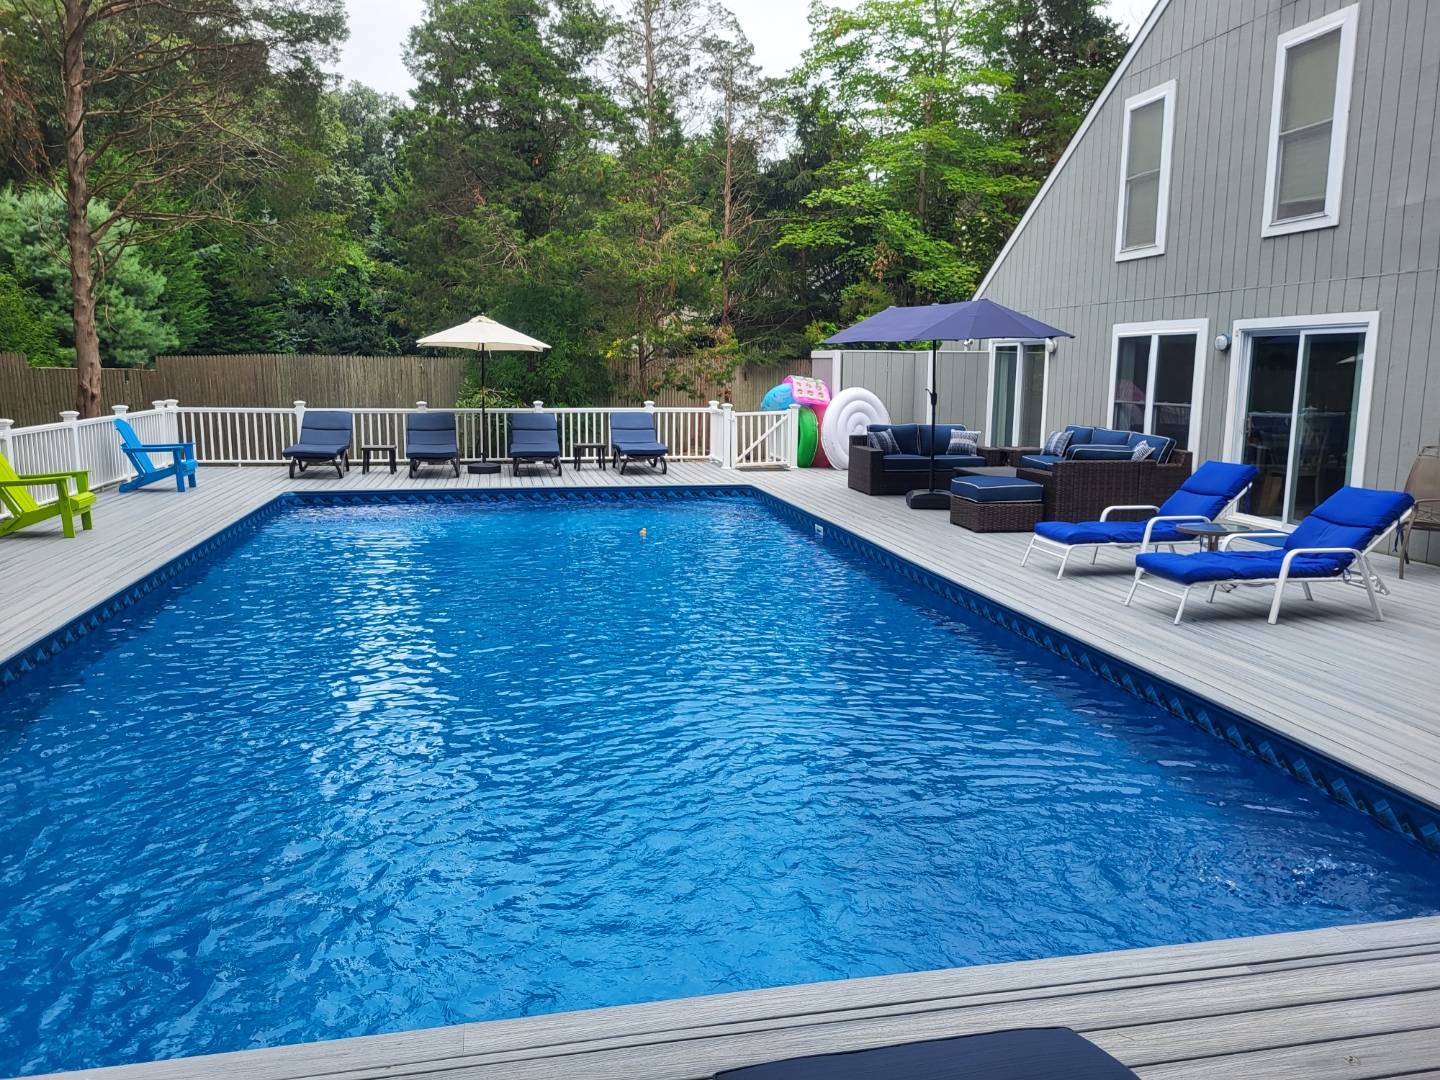 Rental Property at Springs, Springs, Hamptons, NY - Bedrooms: 4 
Bathrooms: 2  - $24,000 MO.